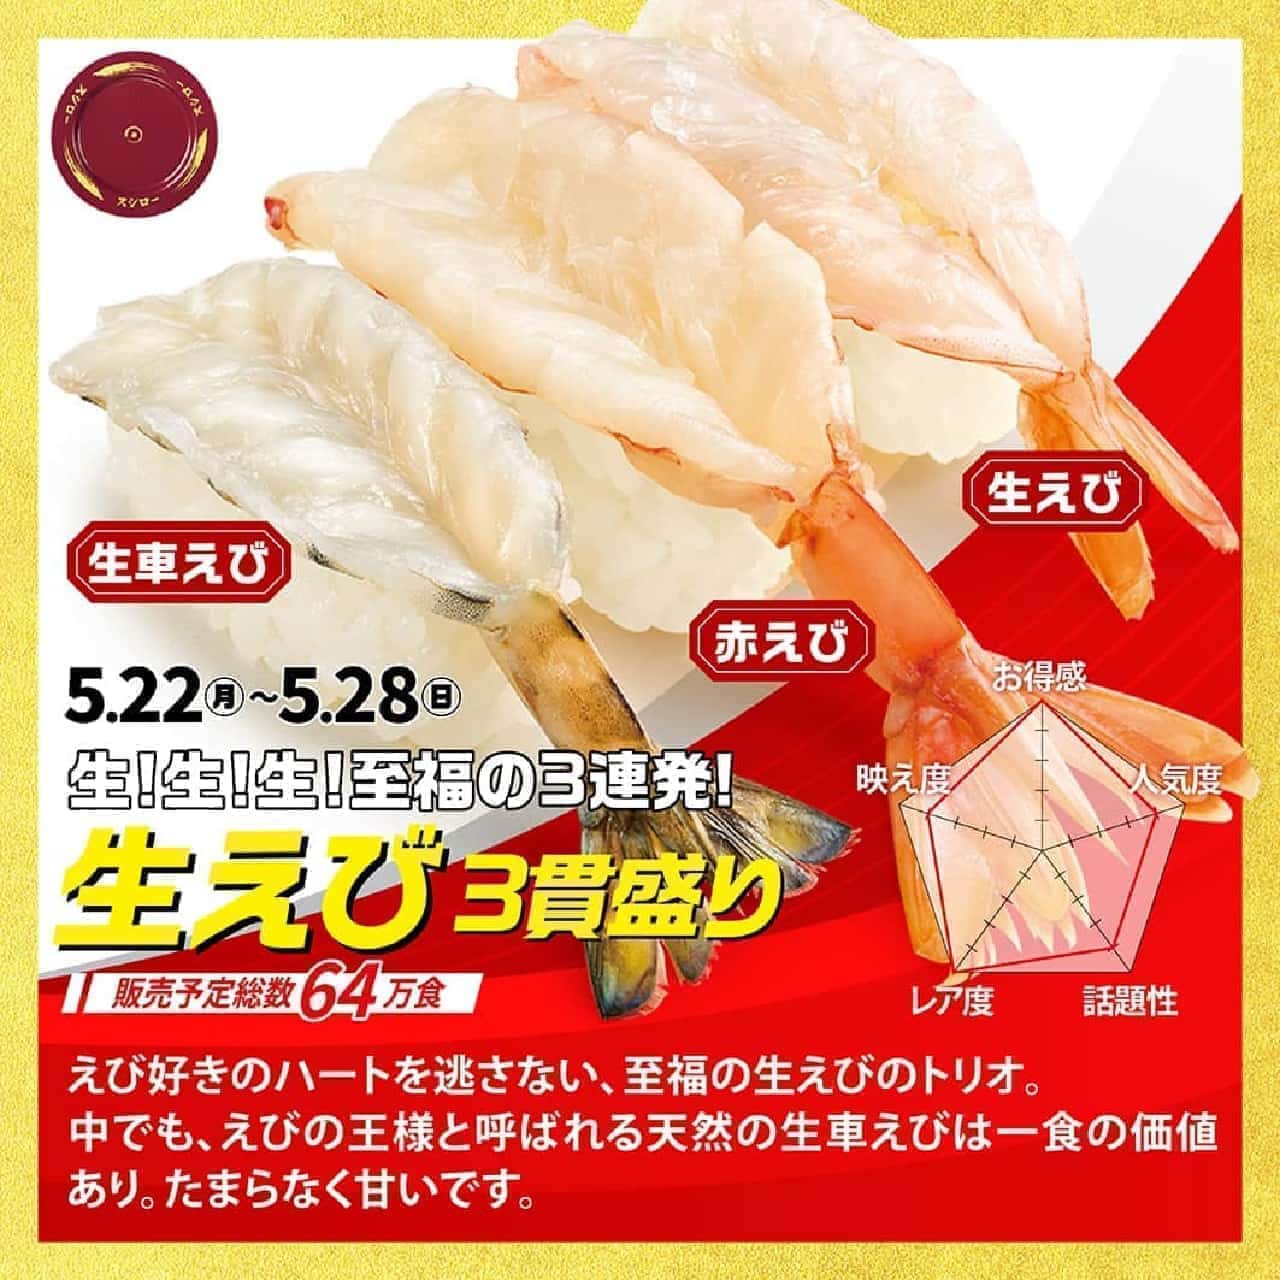 Sushiro "3 pieces of raw shrimp